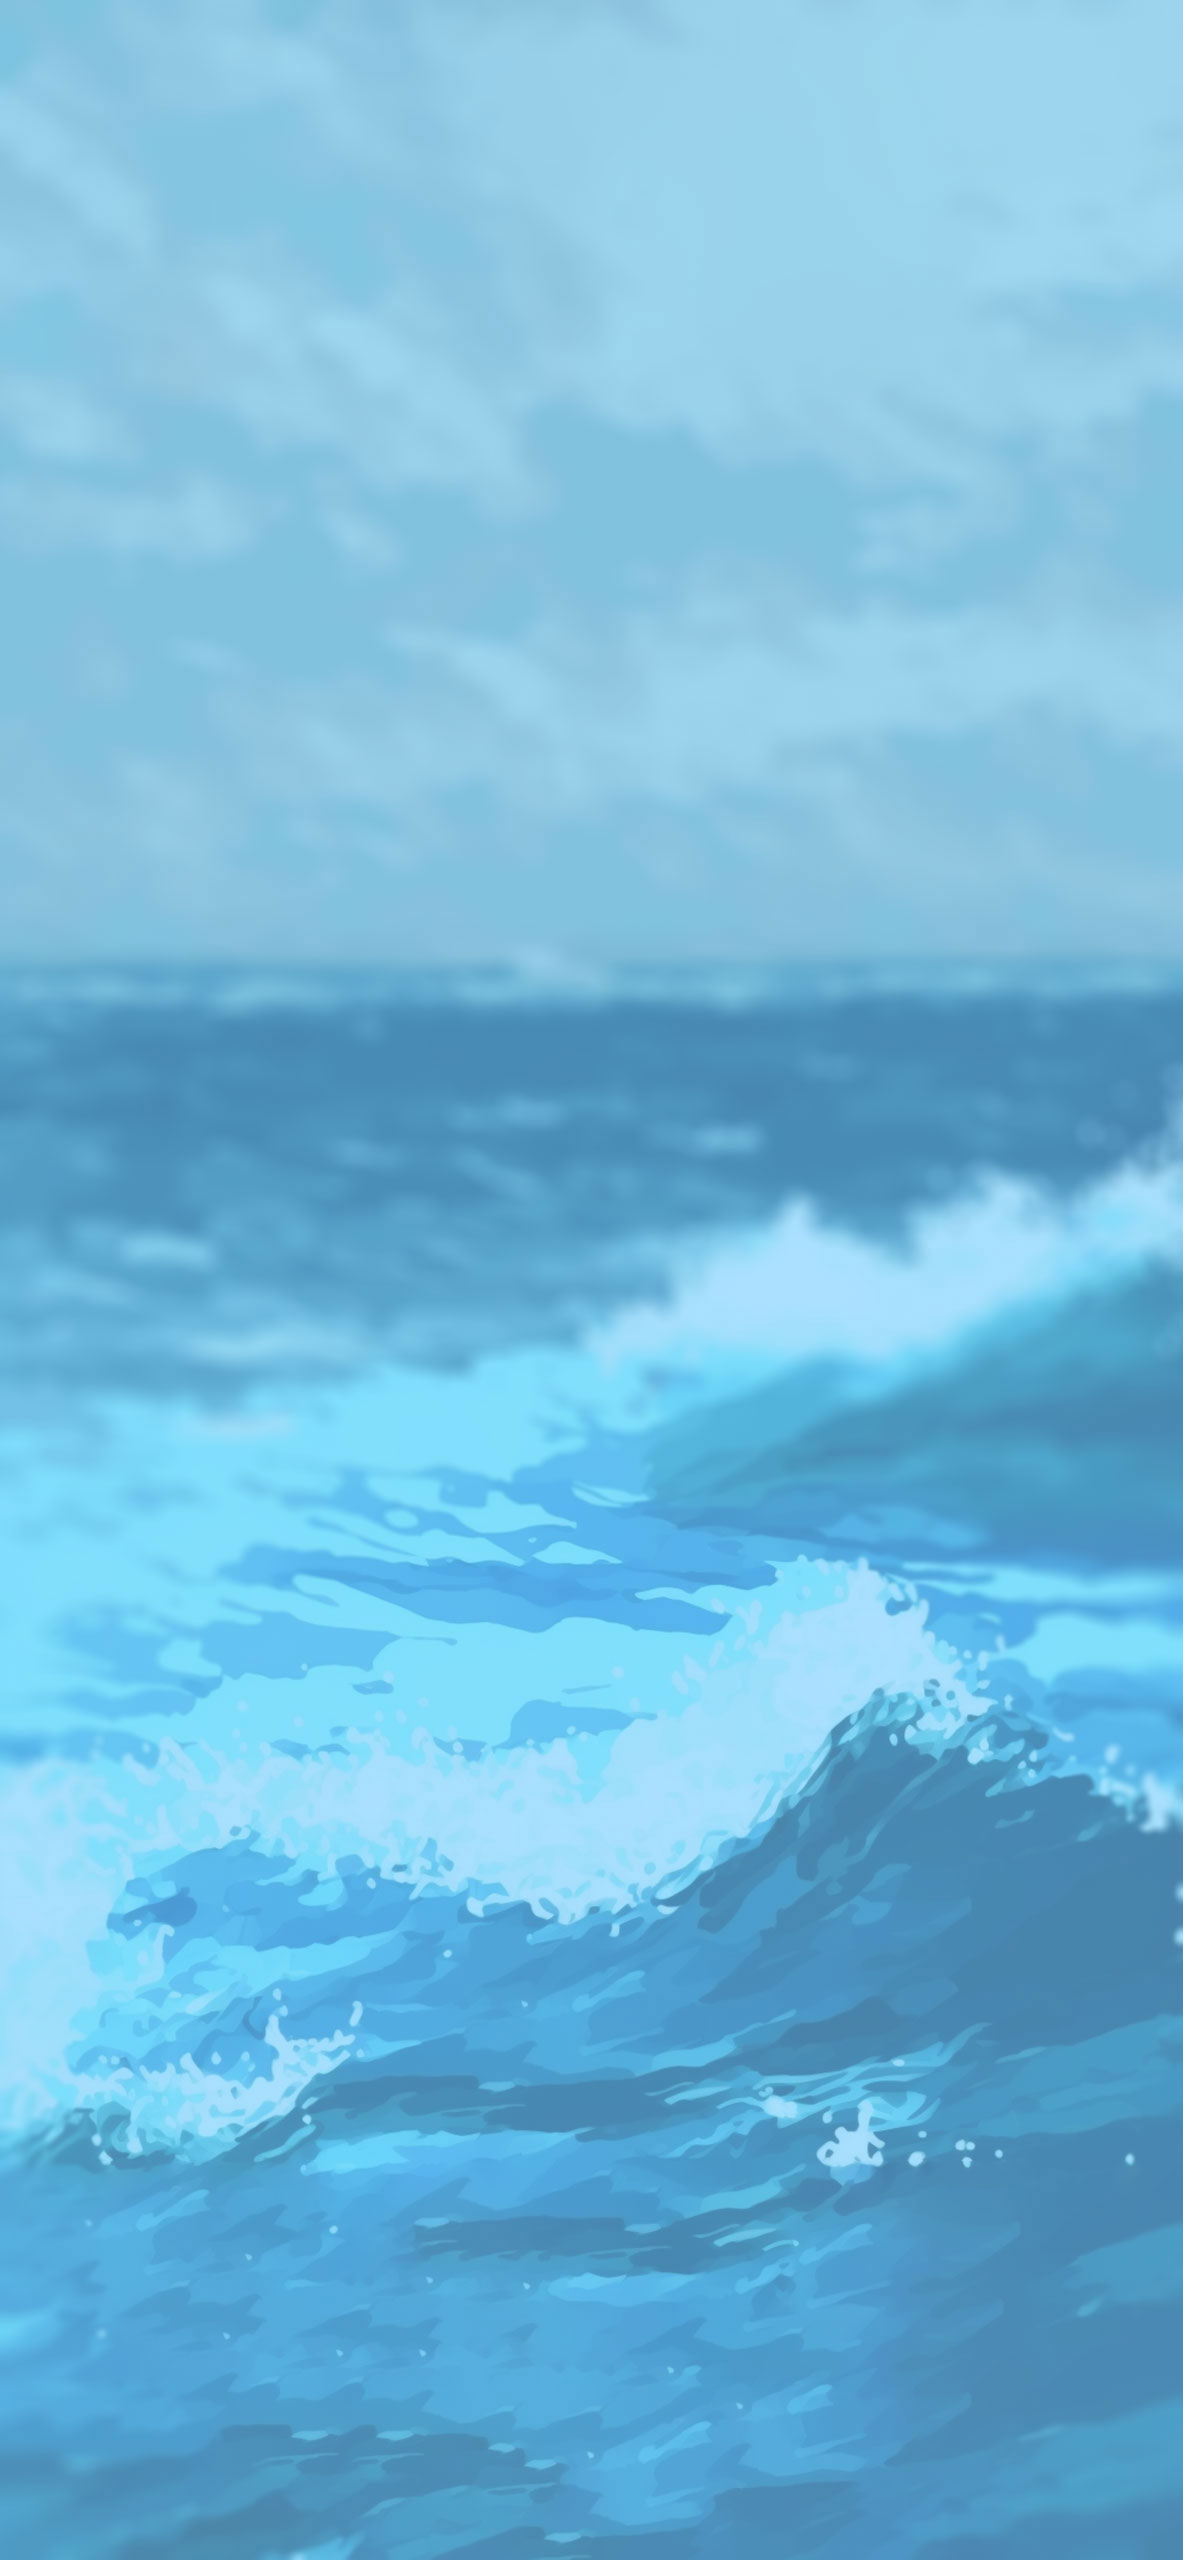 sea wave art blue background